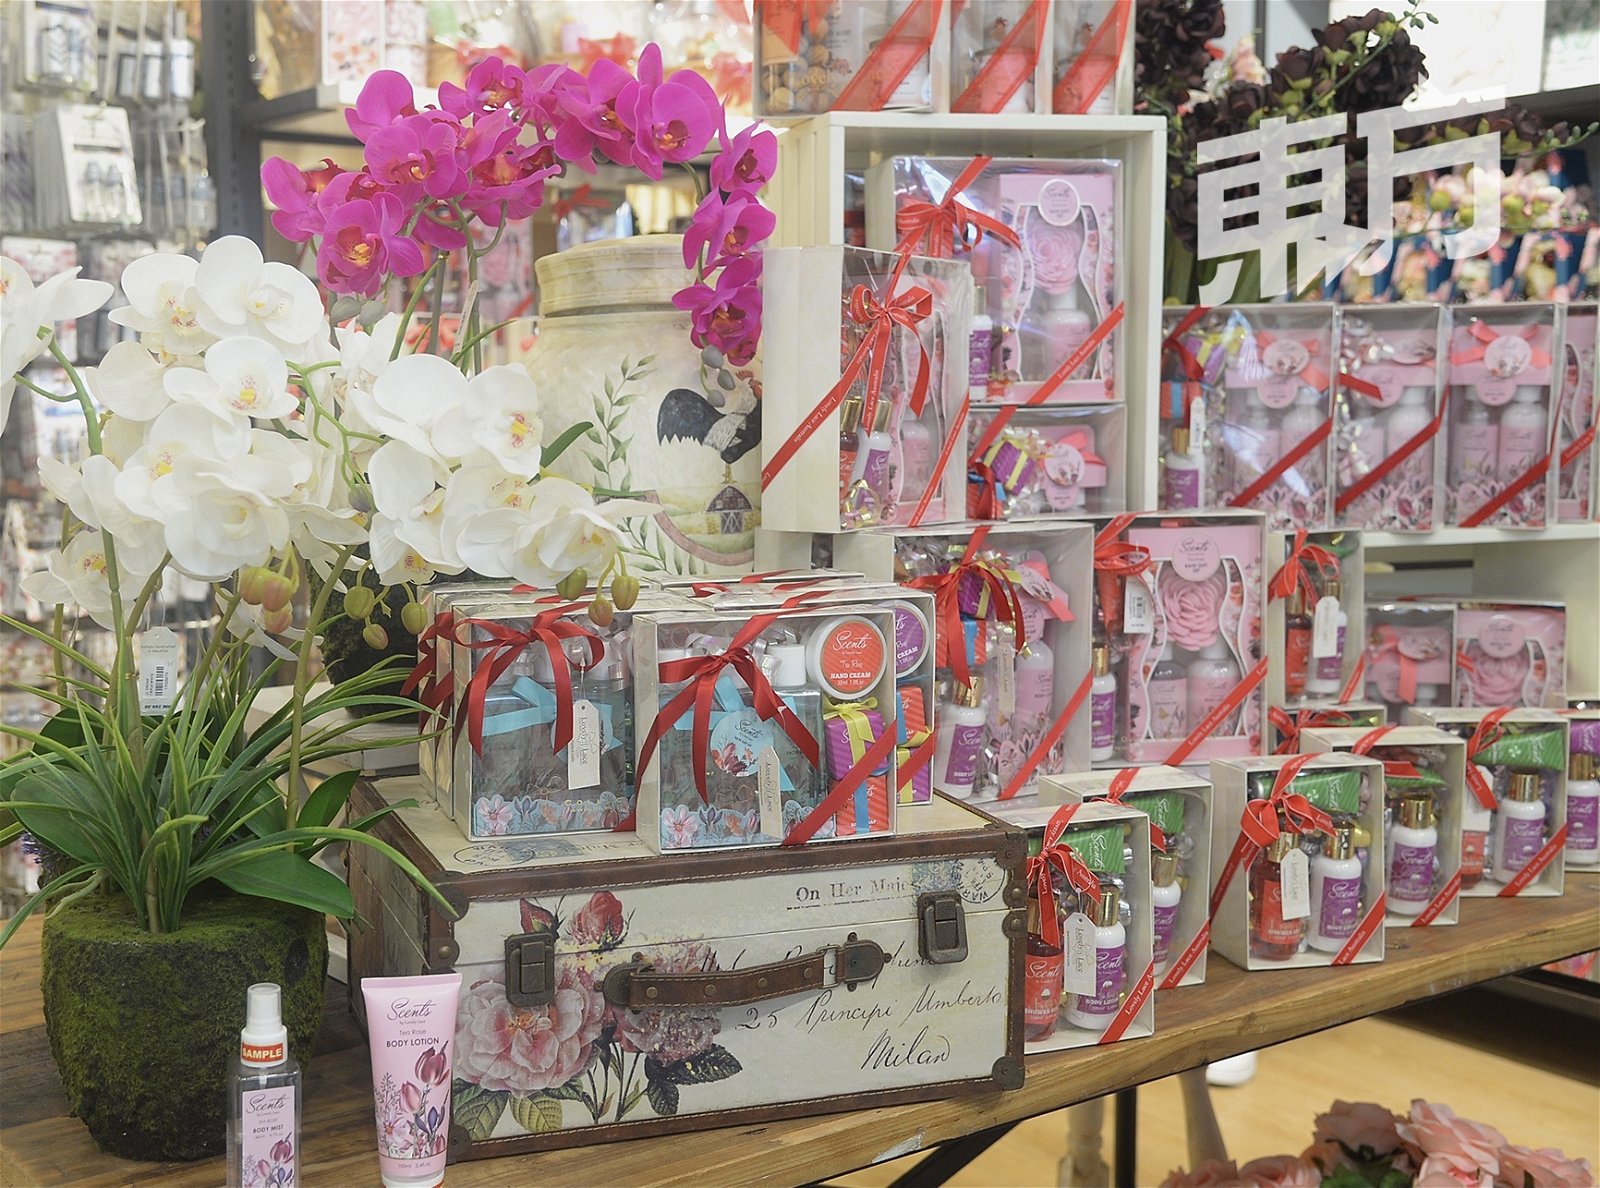 Scents是Lovely Lace的香氛精油系列，广受顾客喜爱，是品牌的主打产品之一。